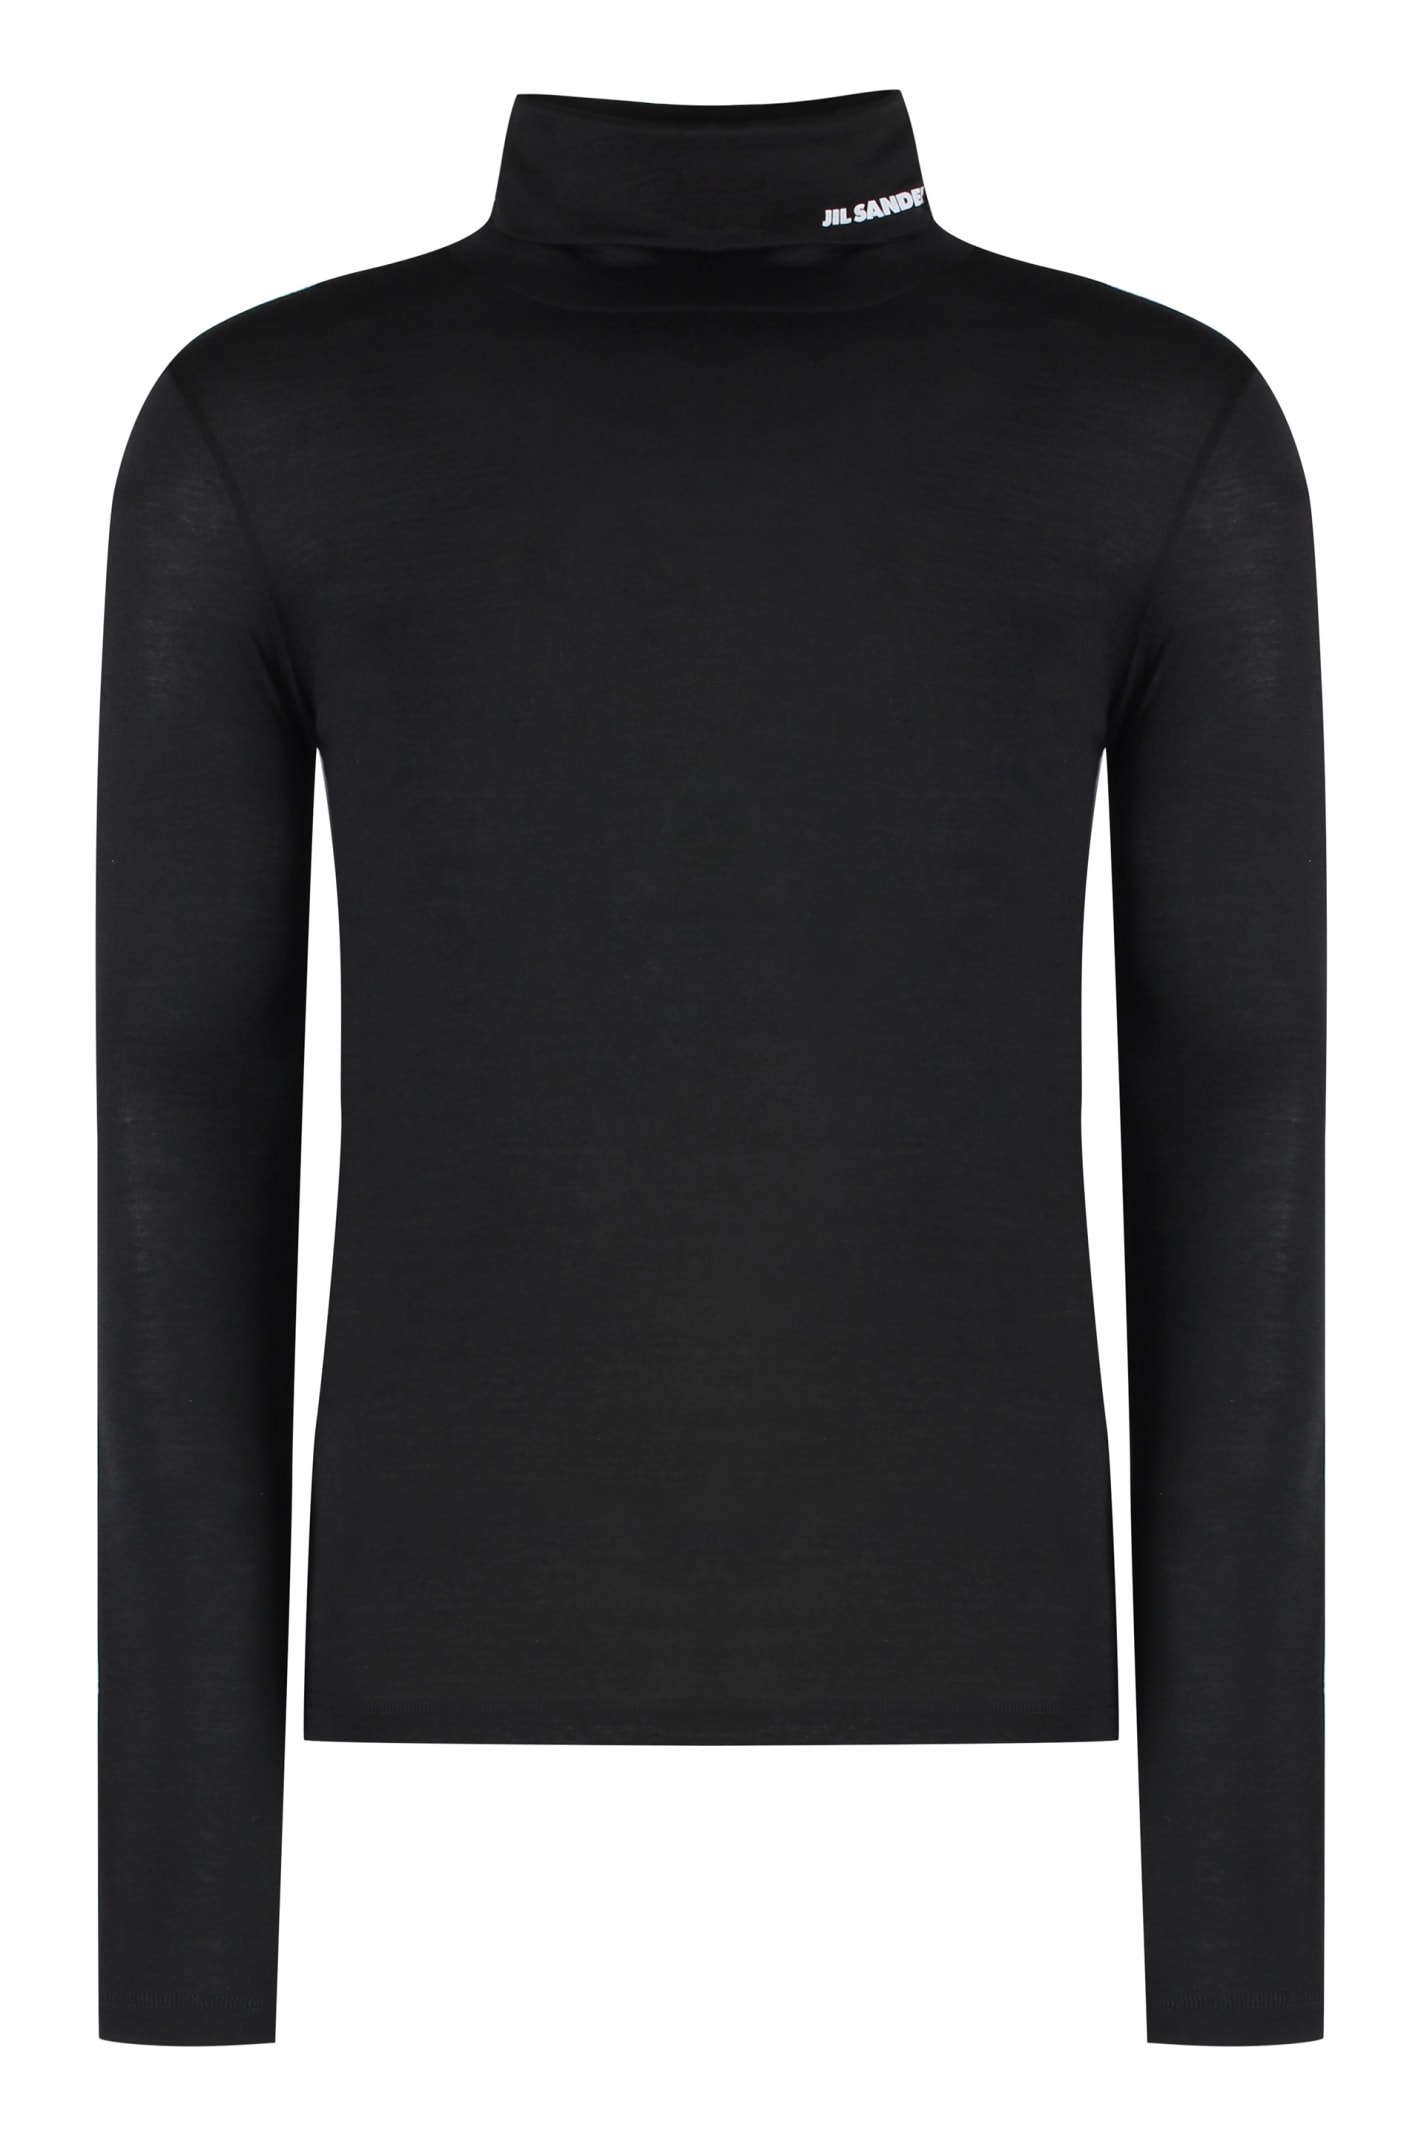 Jil Sander Knitted T-shirt In Black